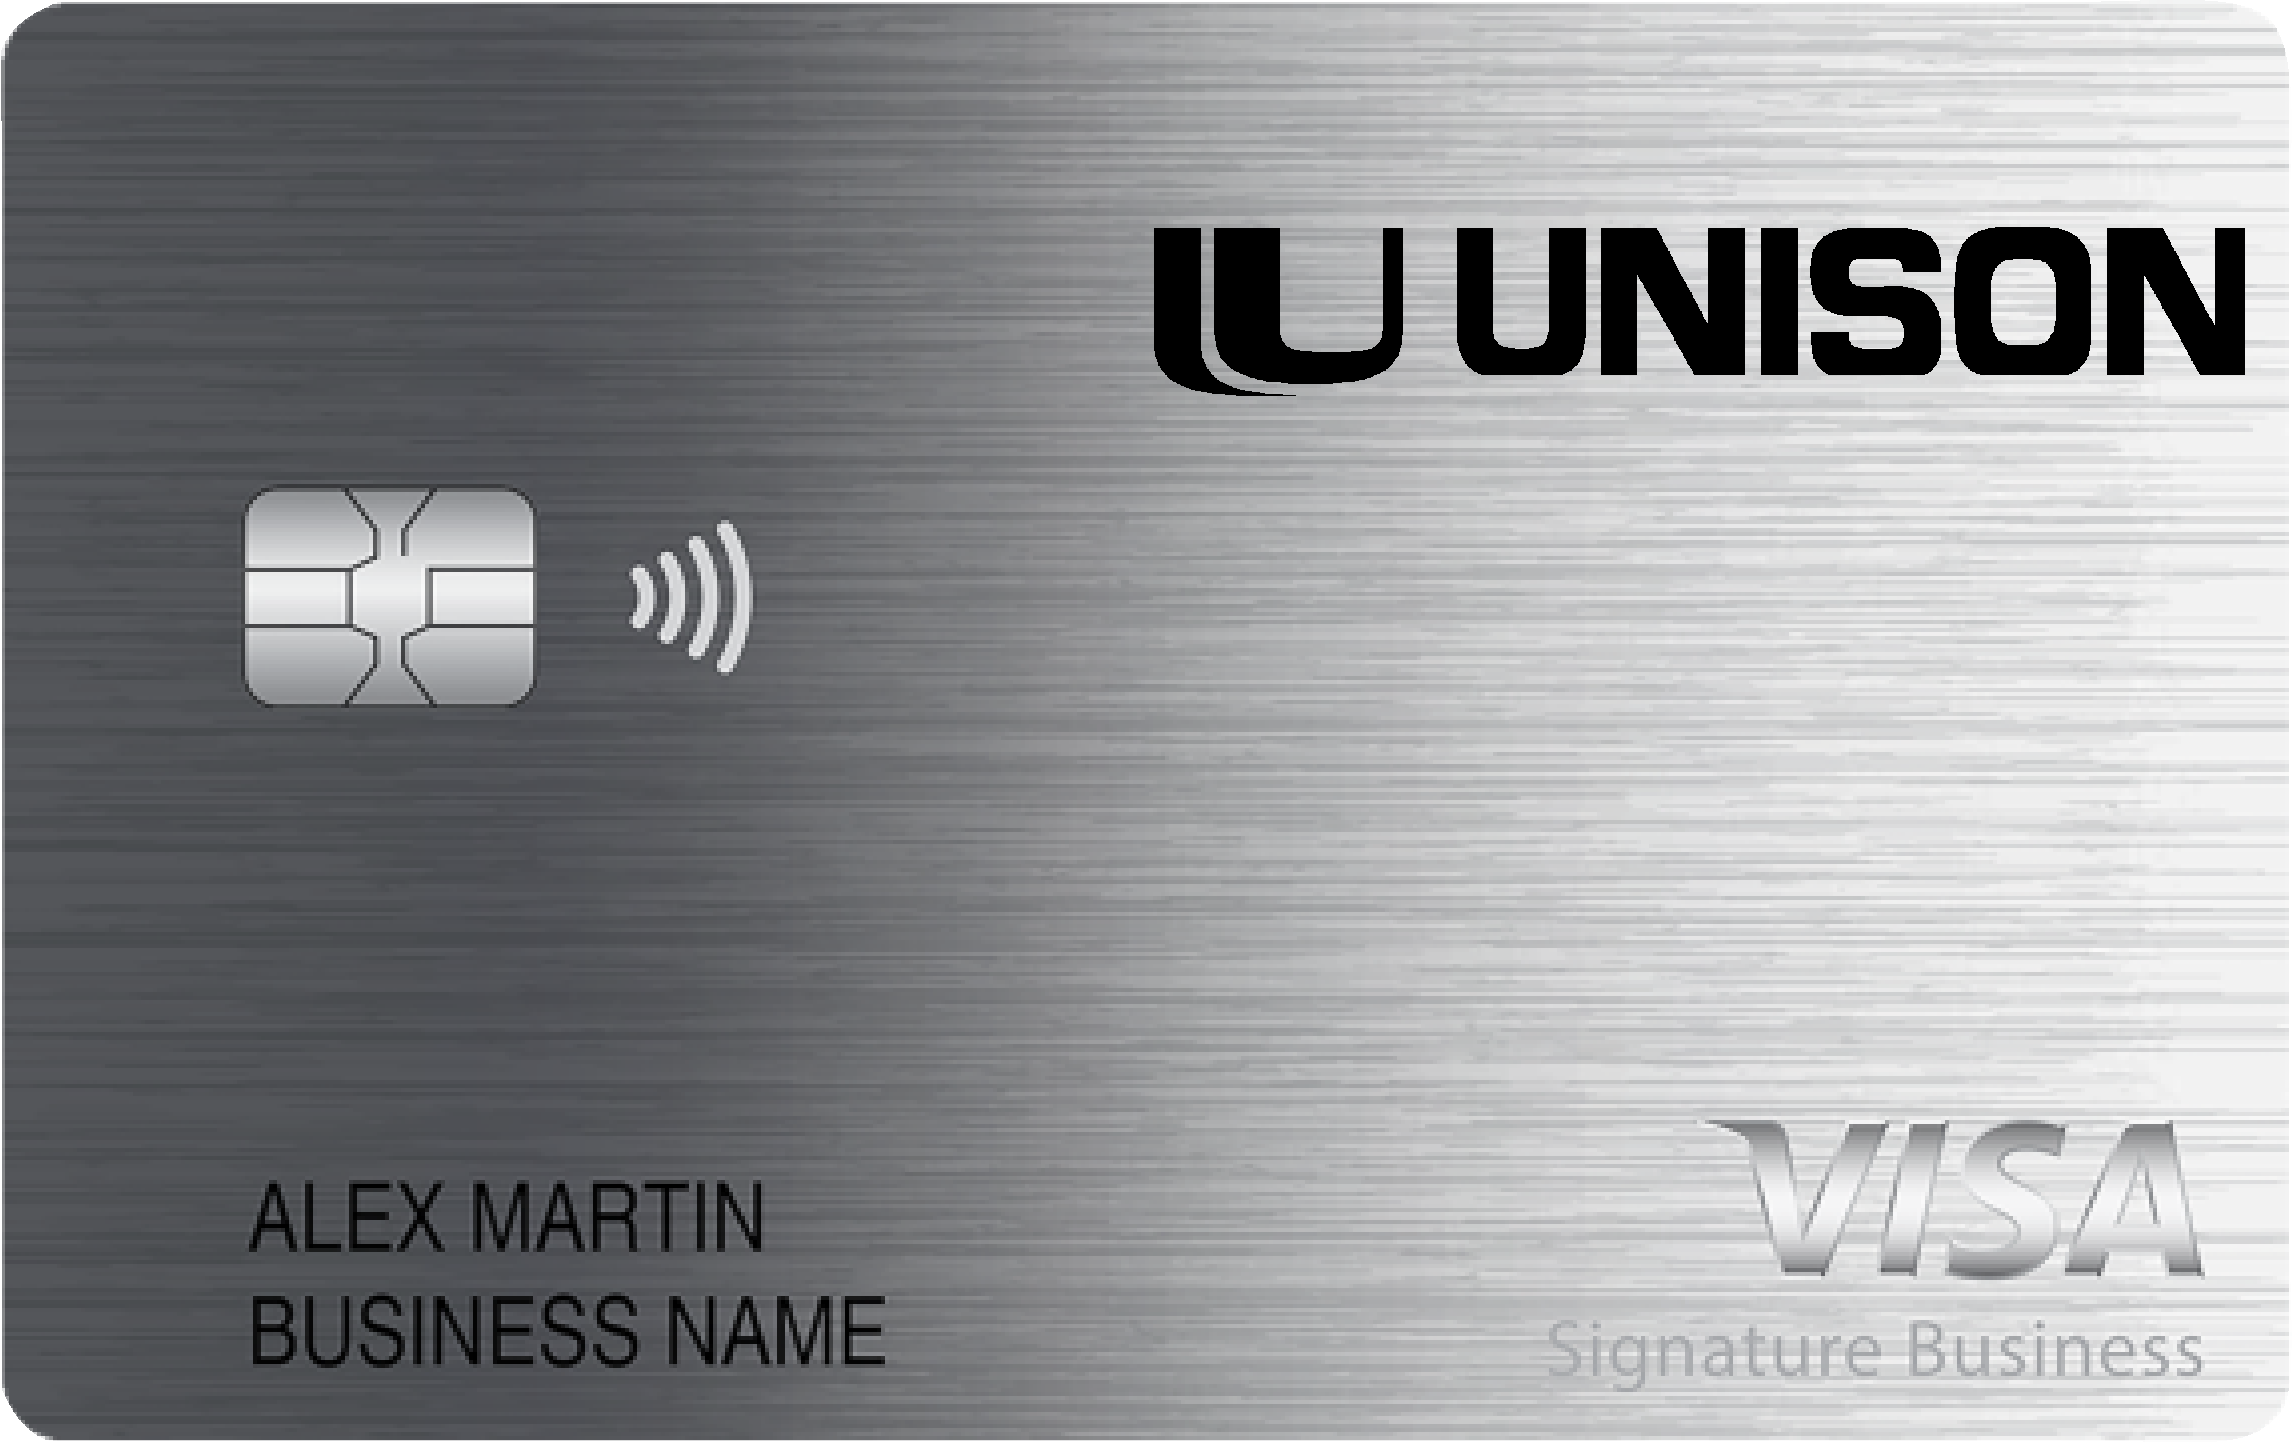 Unison Bank Smart Business Rewards Card